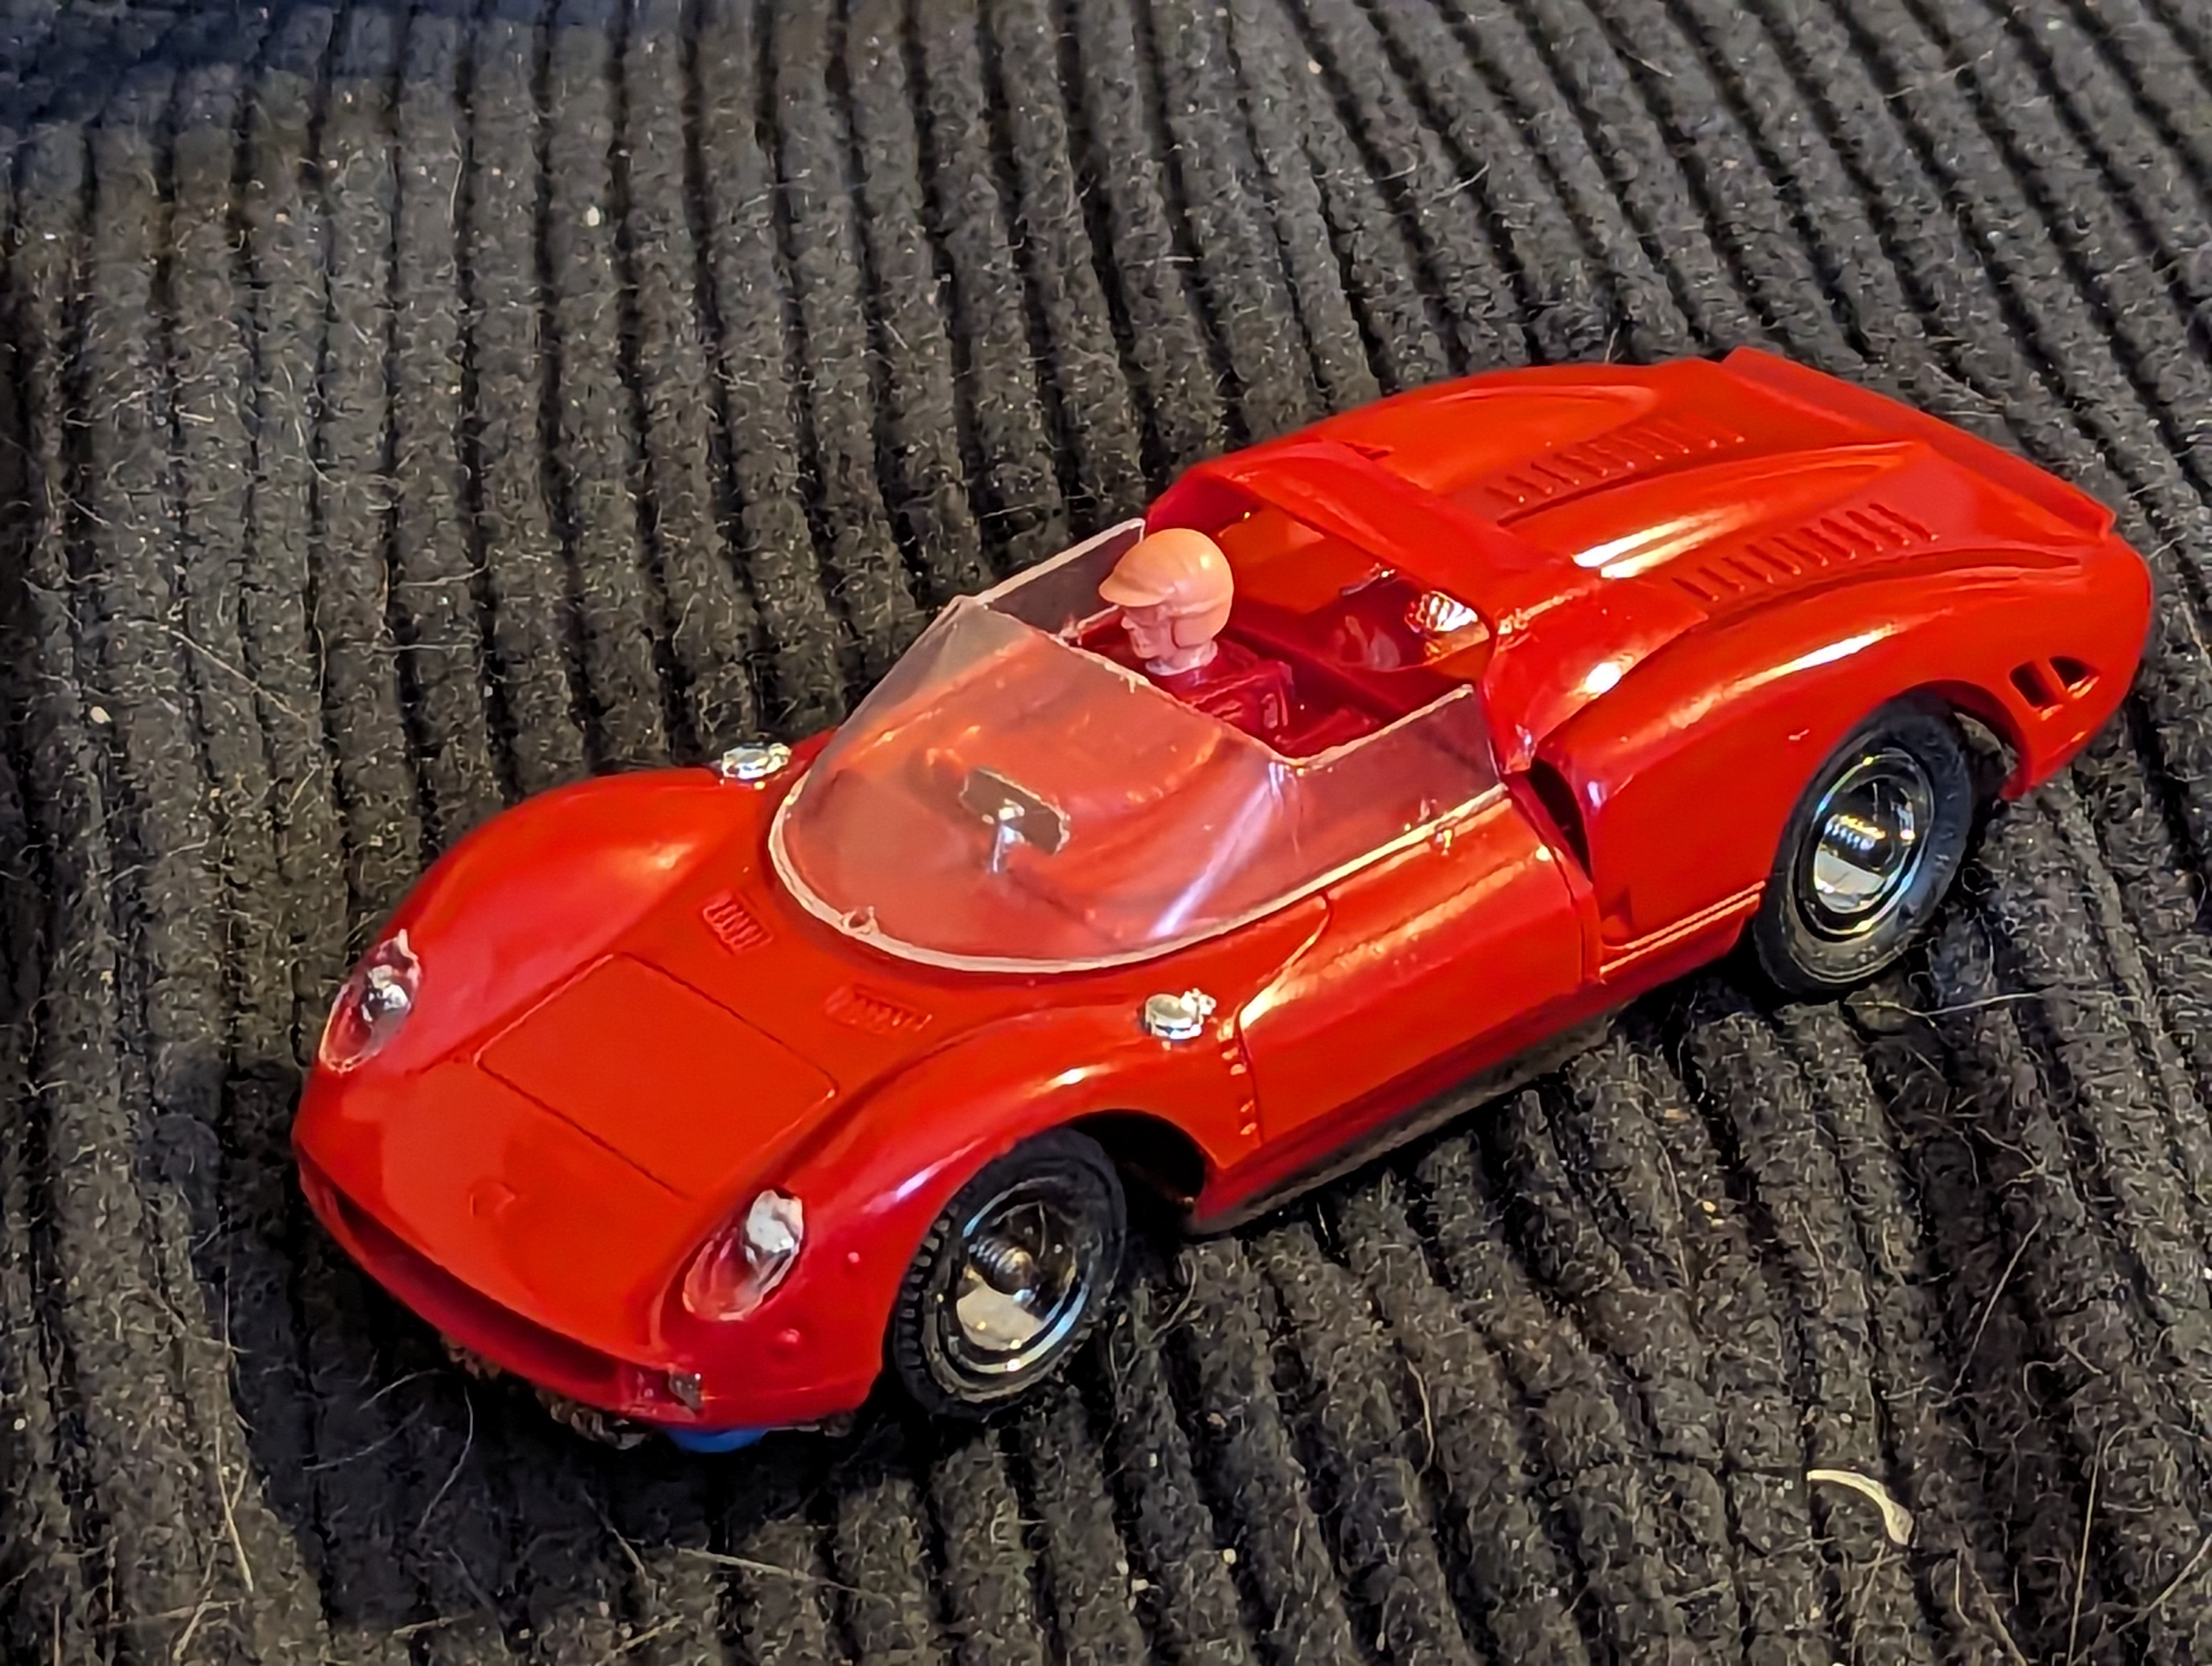 1965 Ferrari 365 P2 - 2nd Issue